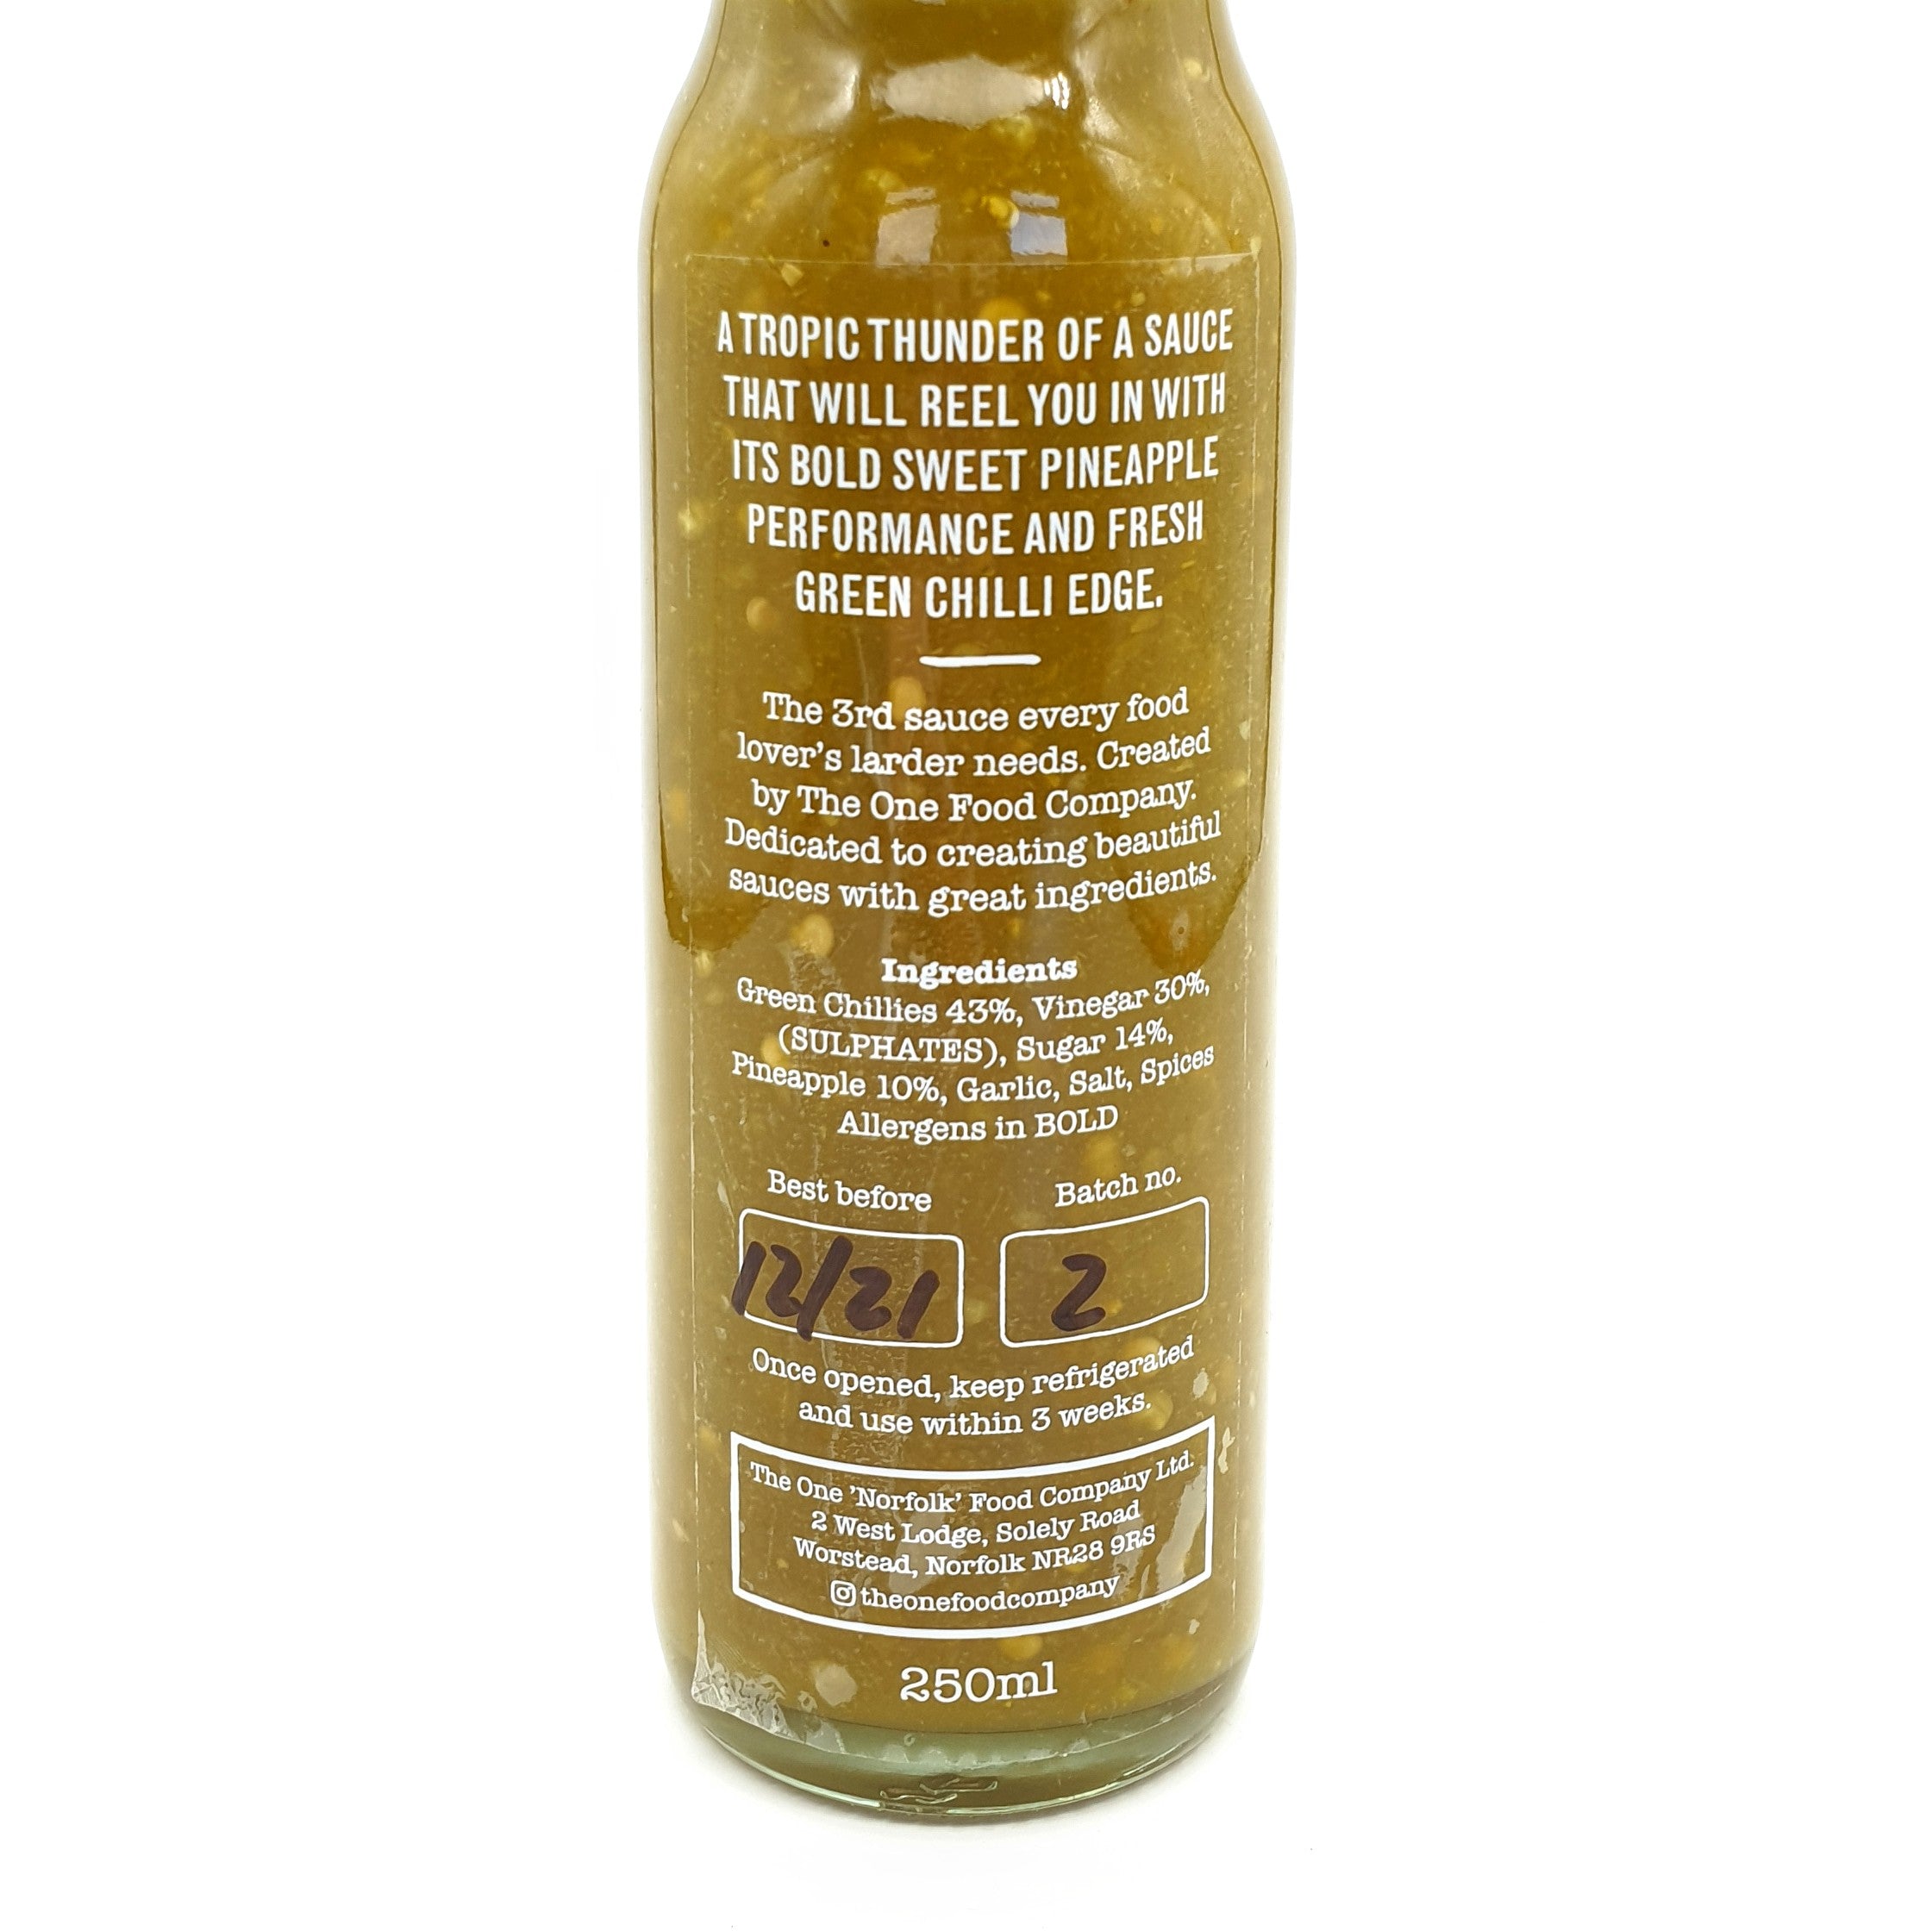 Green Chilli & Pineapple Sauce - 250ml